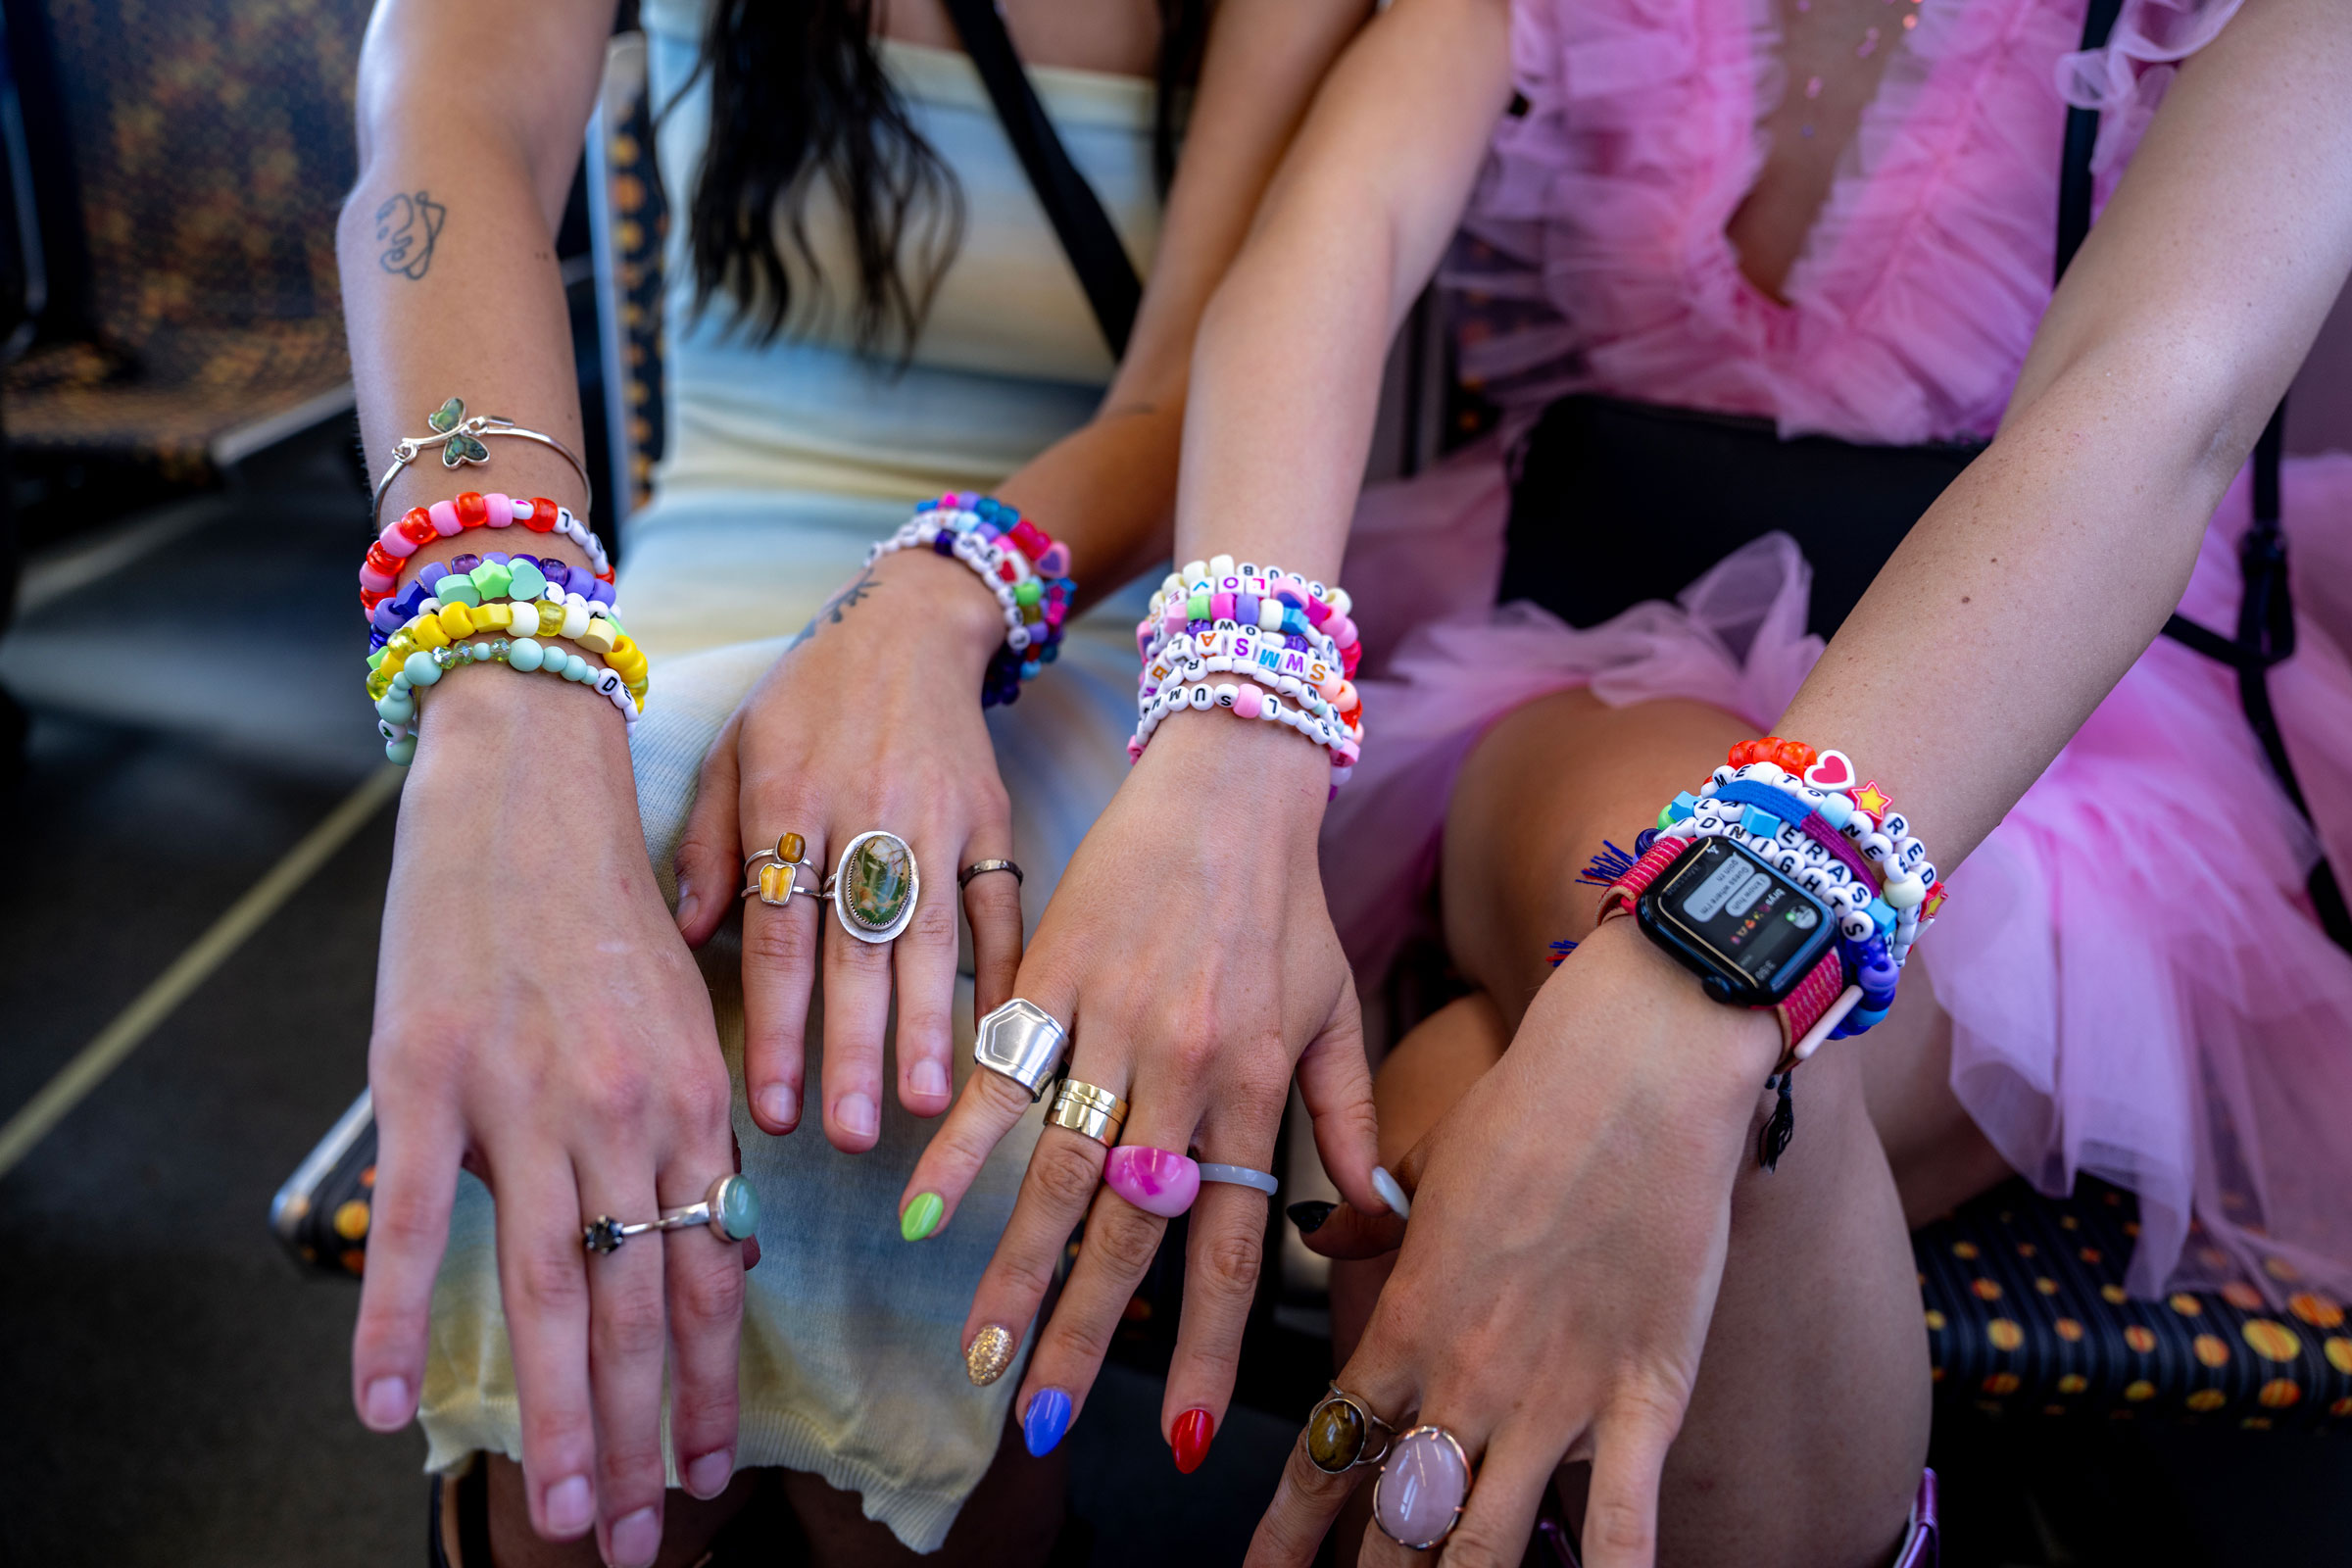 Taylor Swift fans show off their friendship bracelets